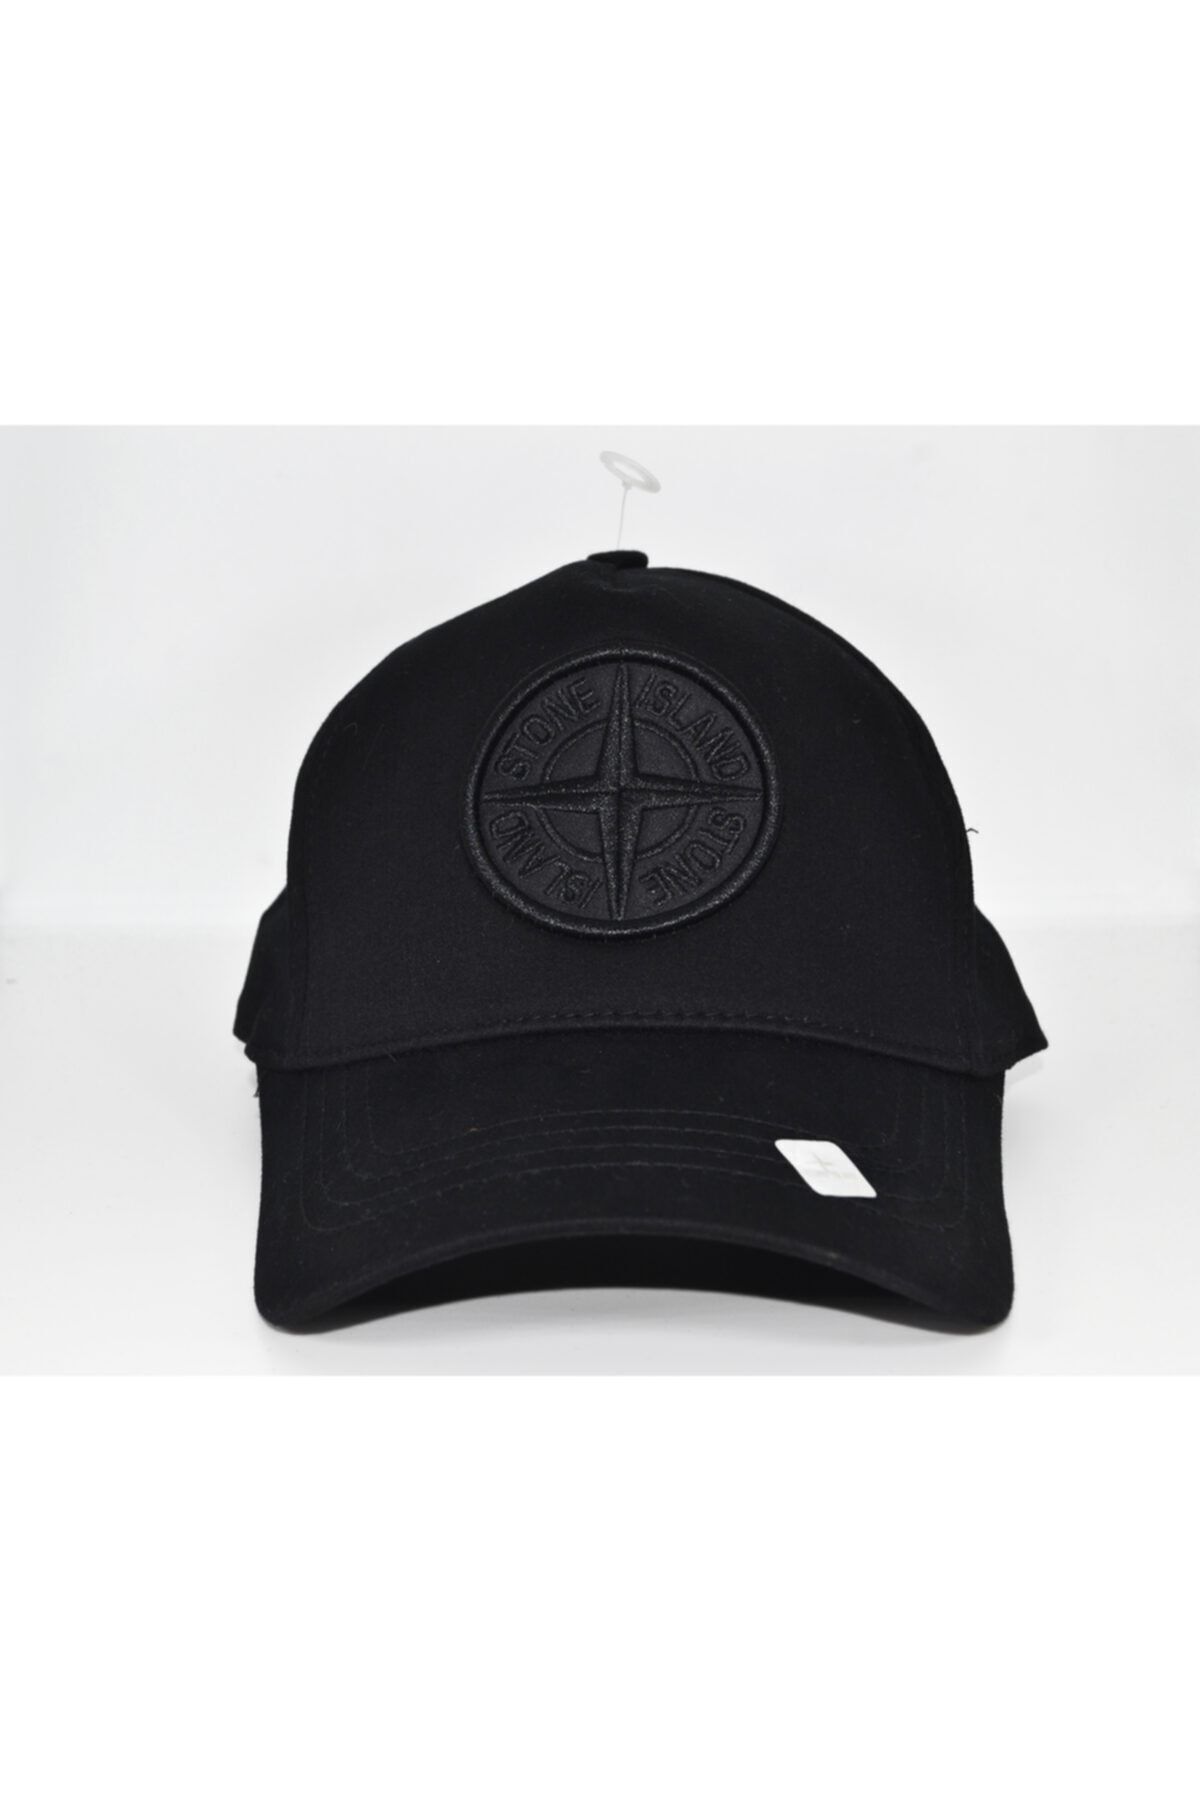 Stone Island Unisex Siyah Şapka